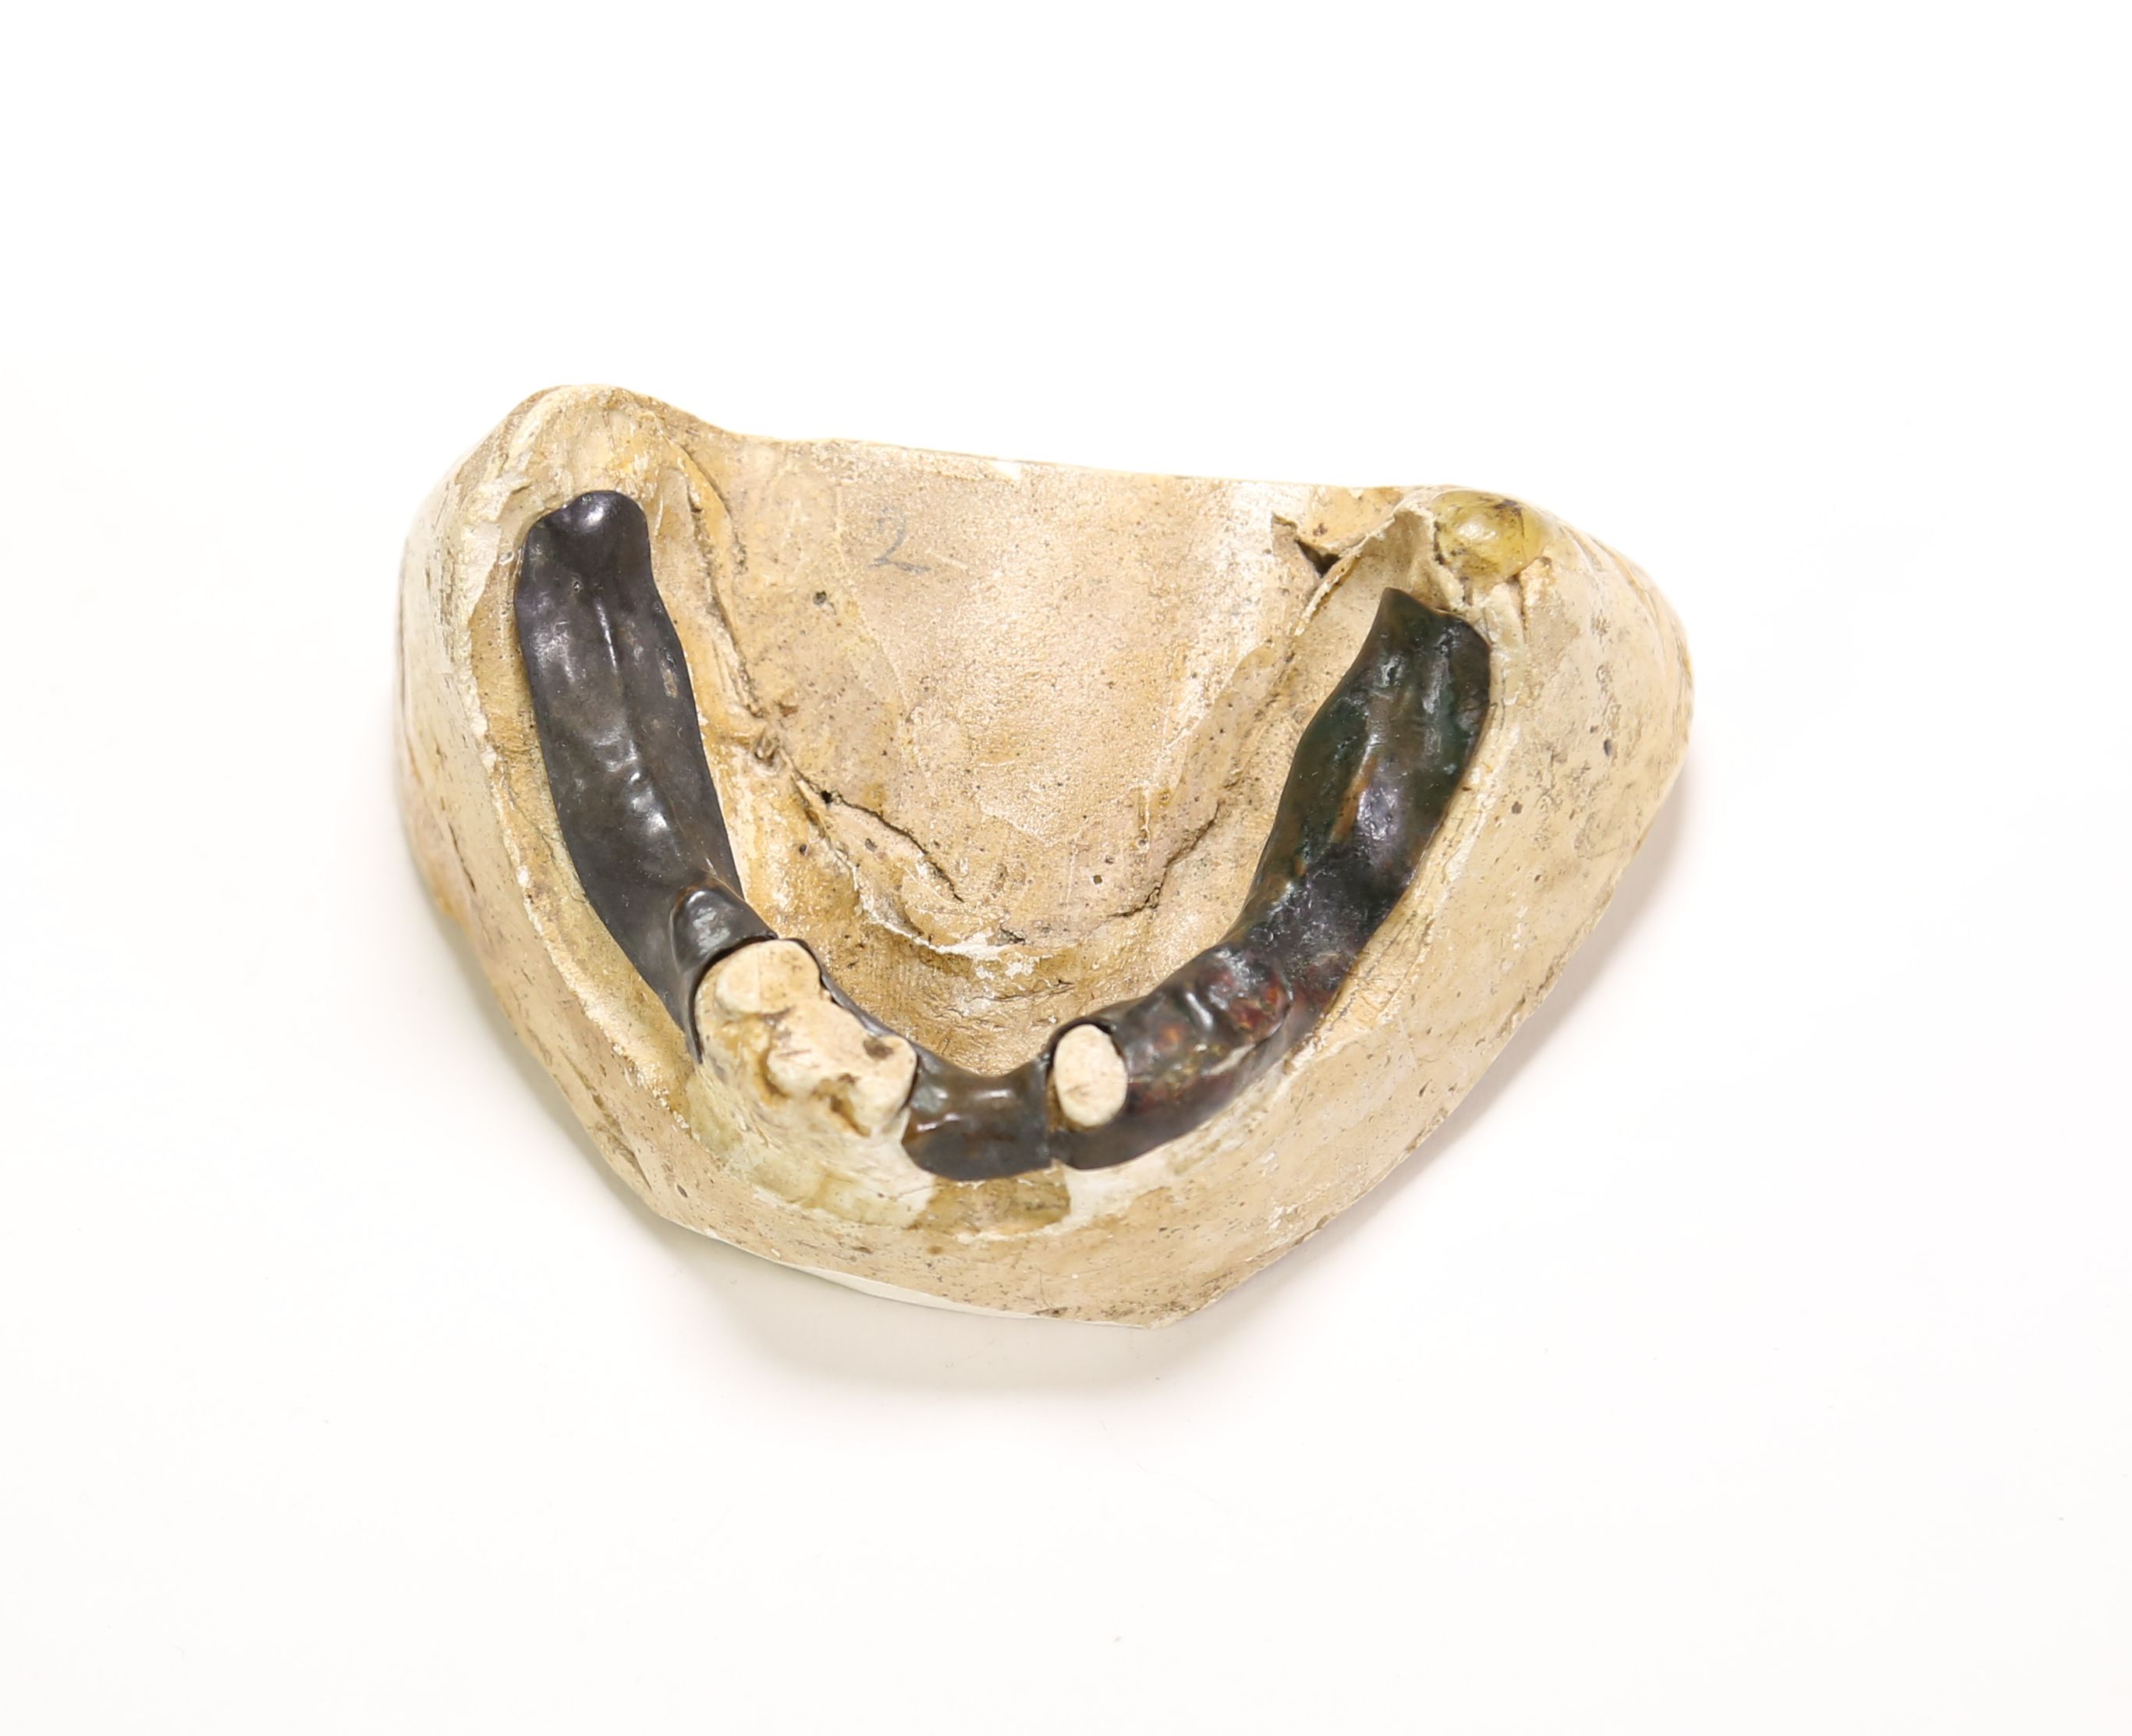 plaster dental cast